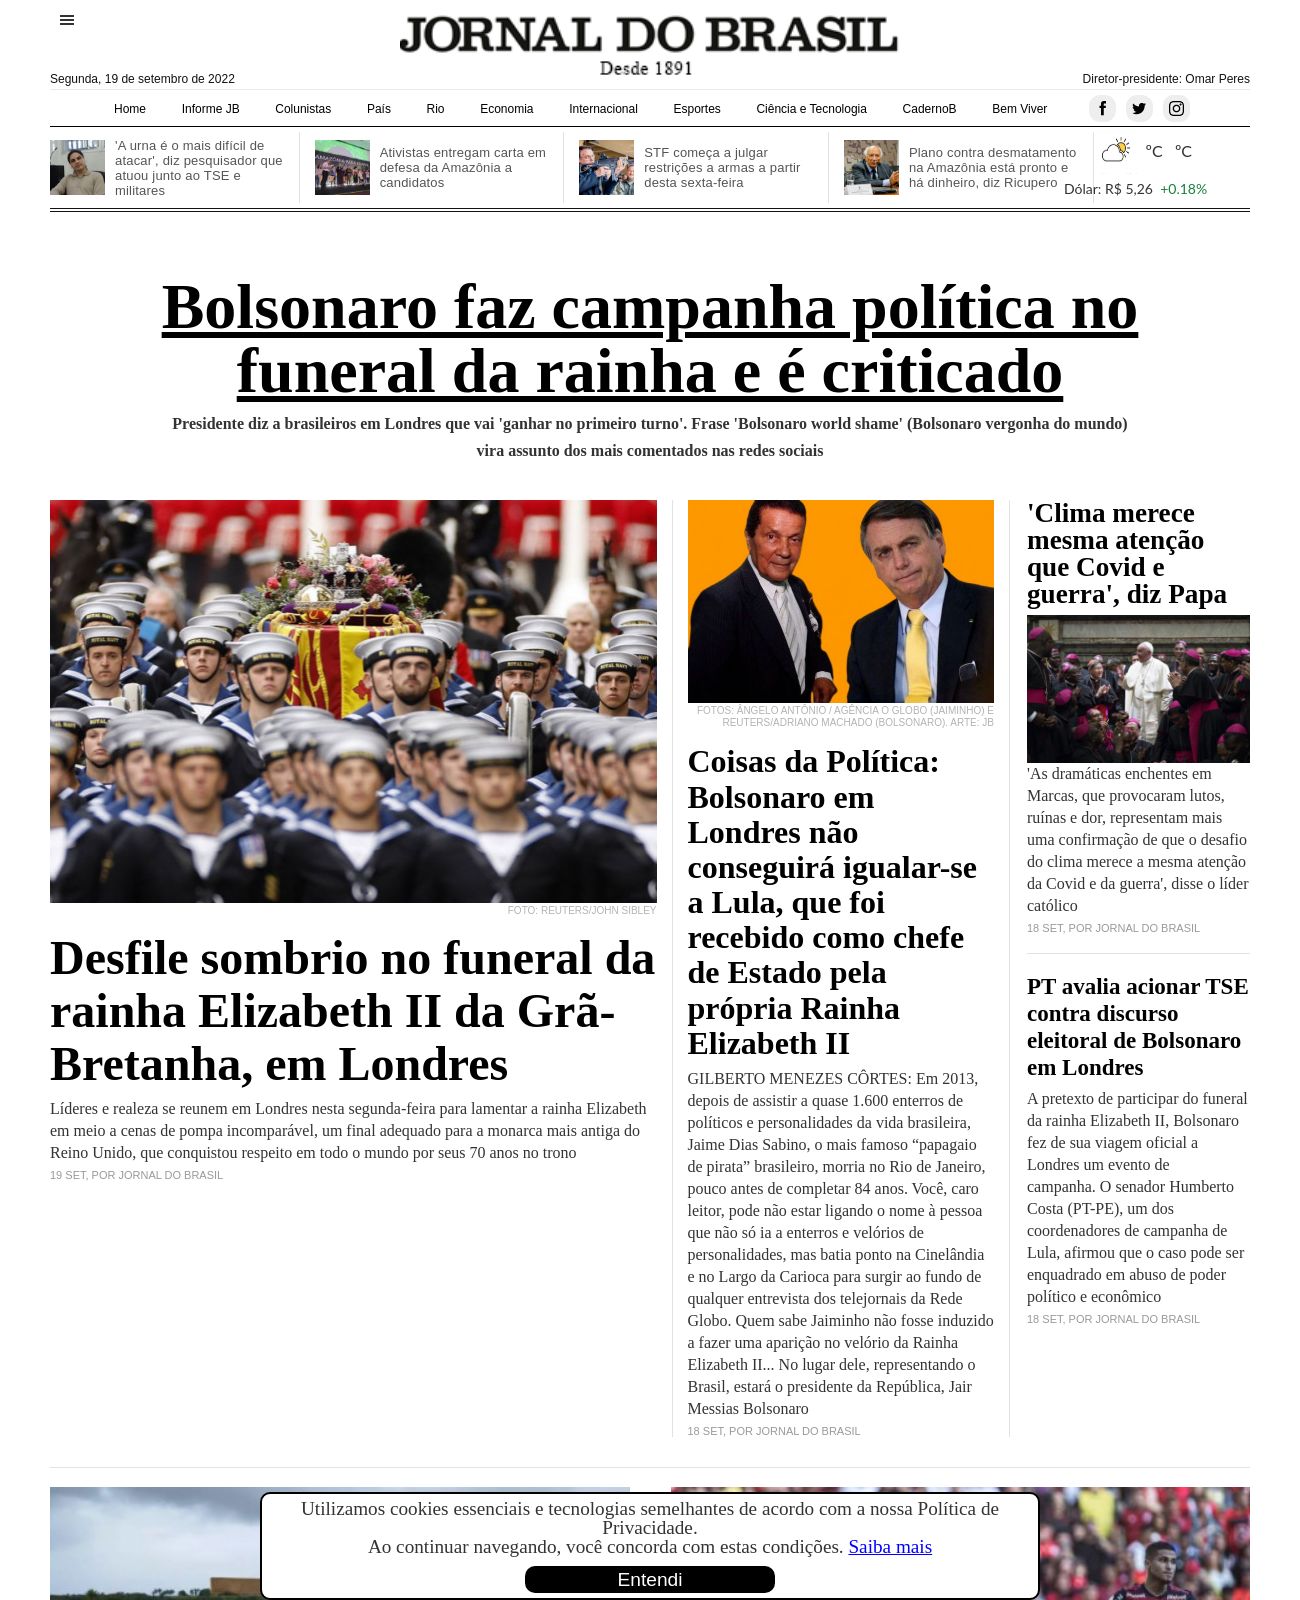 Jornal do Brasil at 2022-09-19 09:01:13-03:00 local time